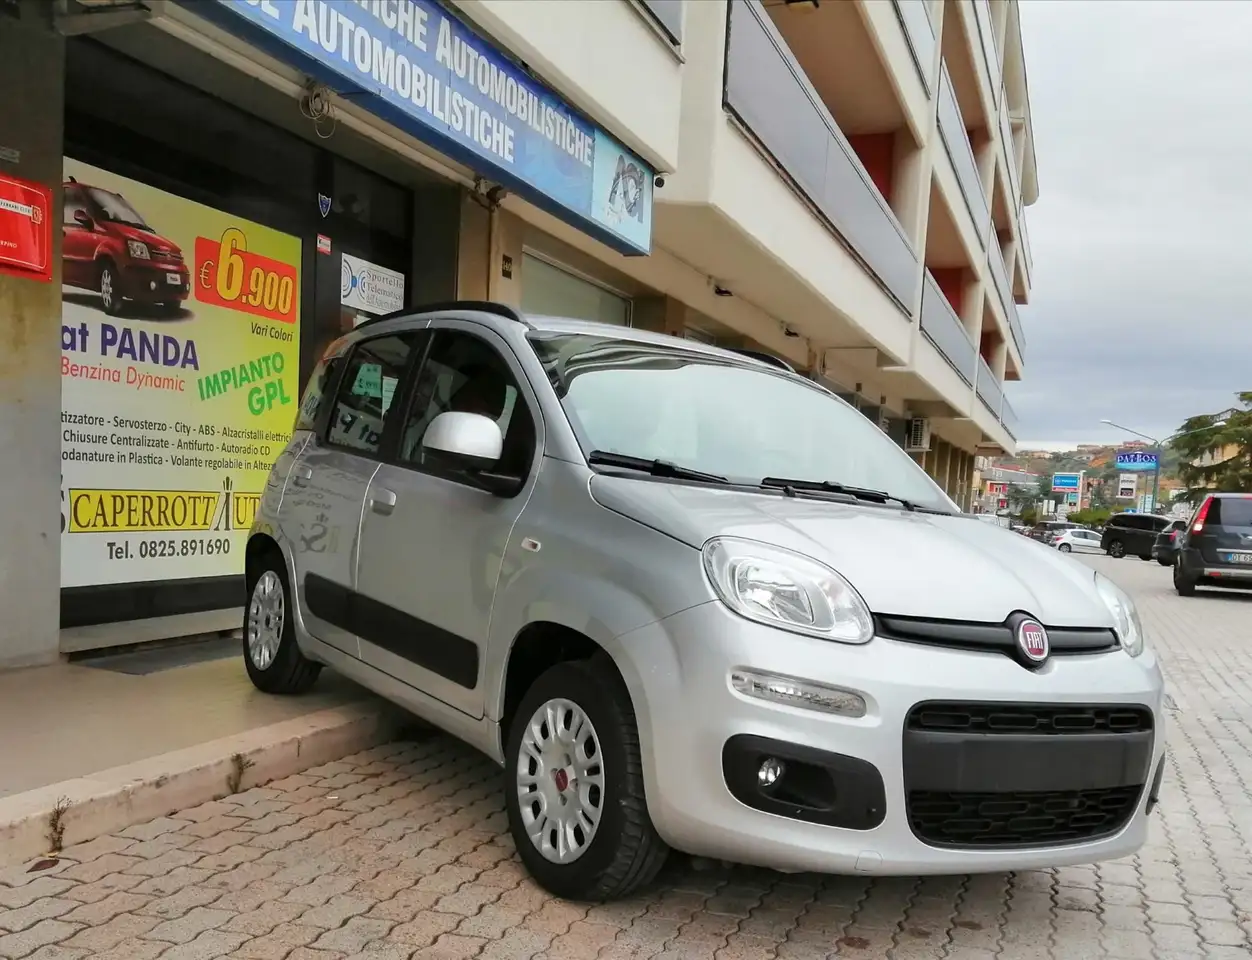 Fiat Panda 169 1.2 benzina - Auto In vendita a Avellino